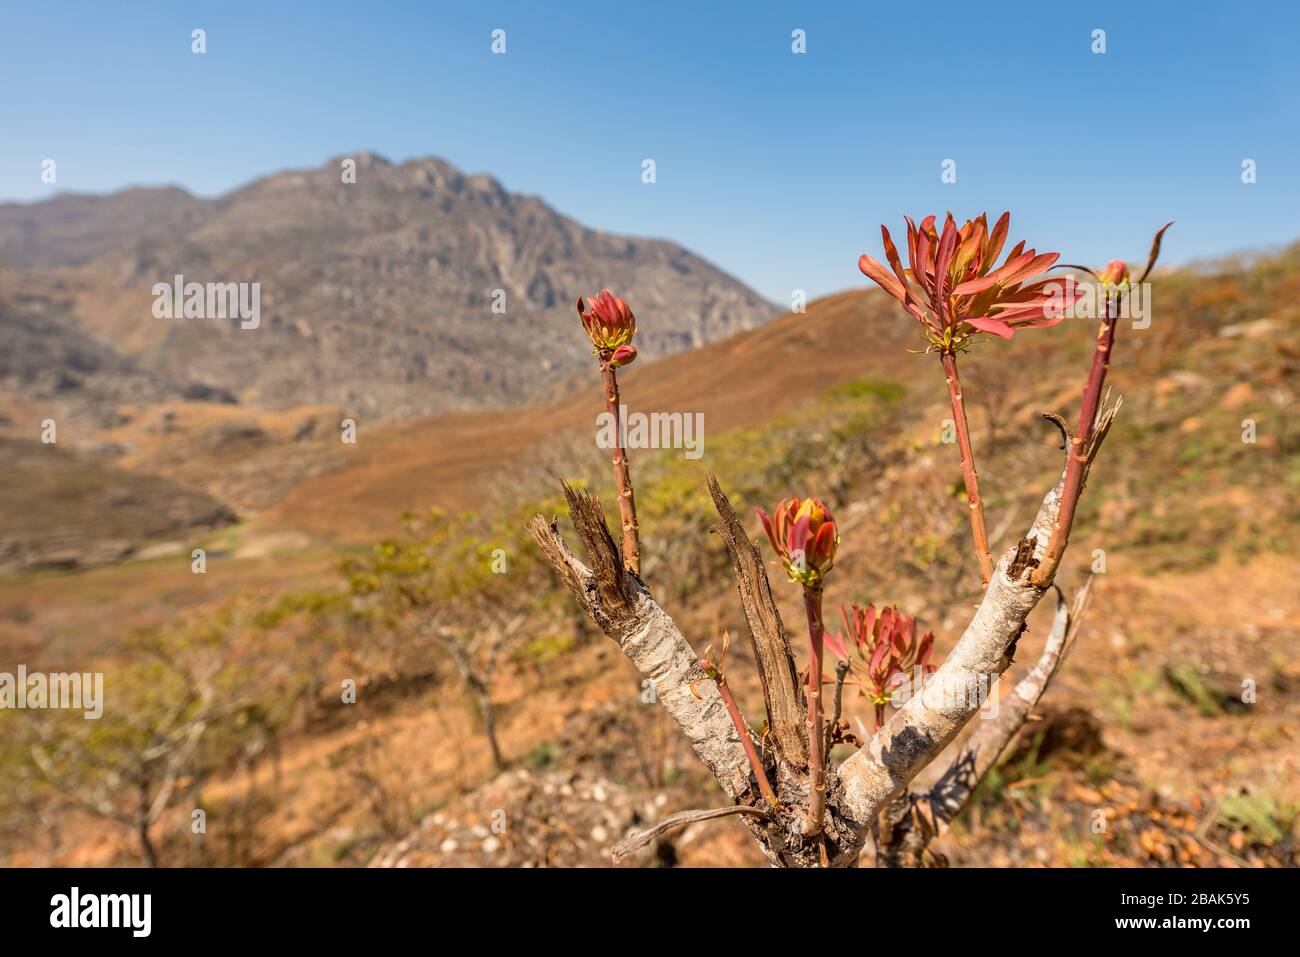 Flowering Msasa's seen in Zimbabwe's Chimanimani Mountains. Stock Photo